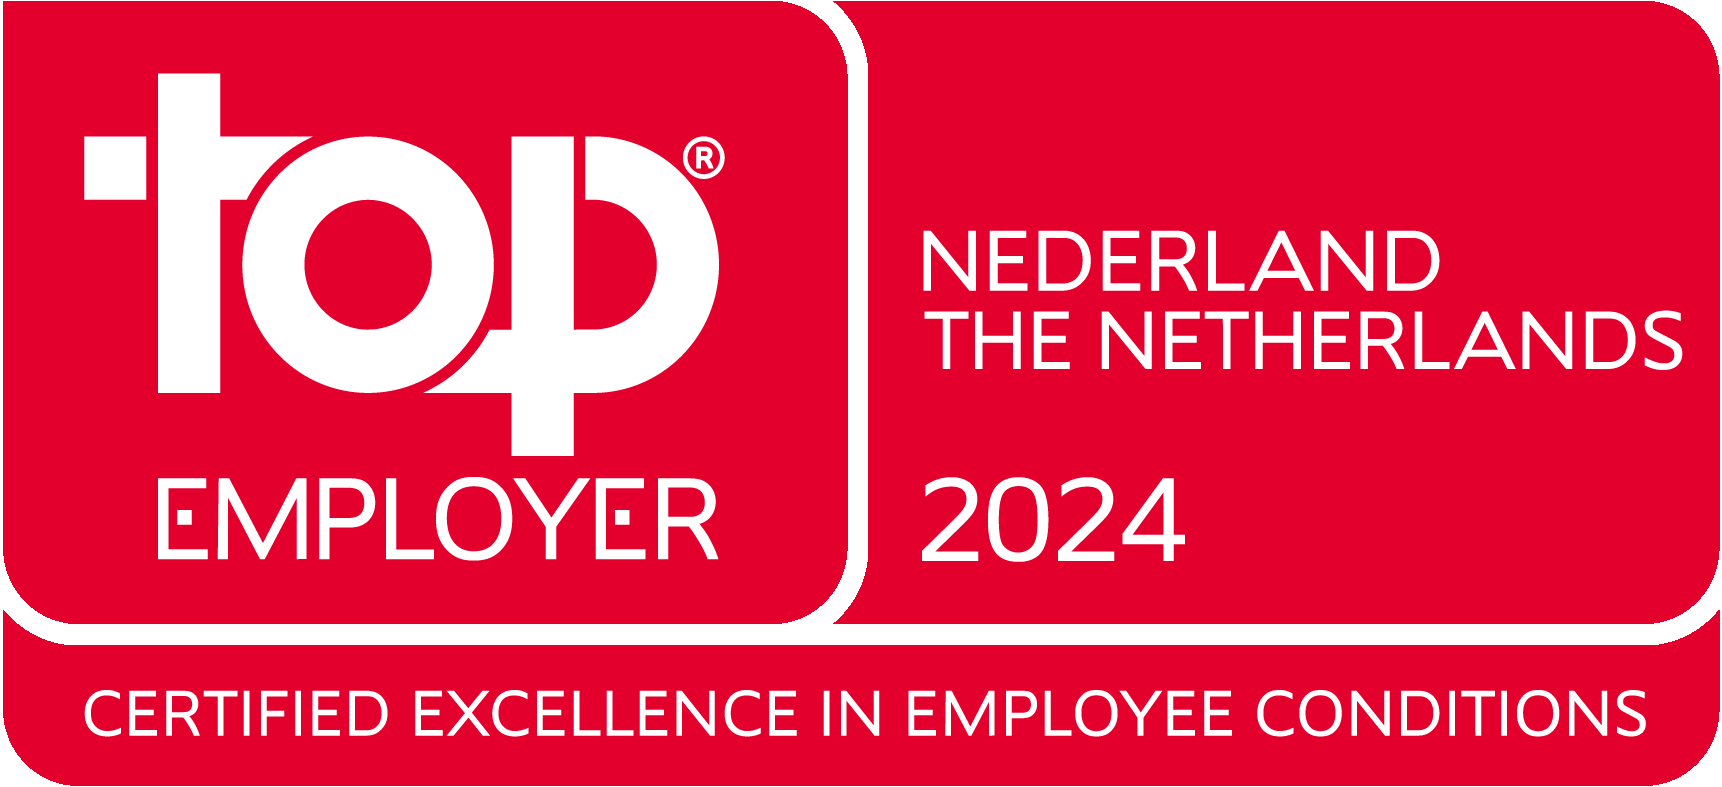 Top Employer Netherlands 2024